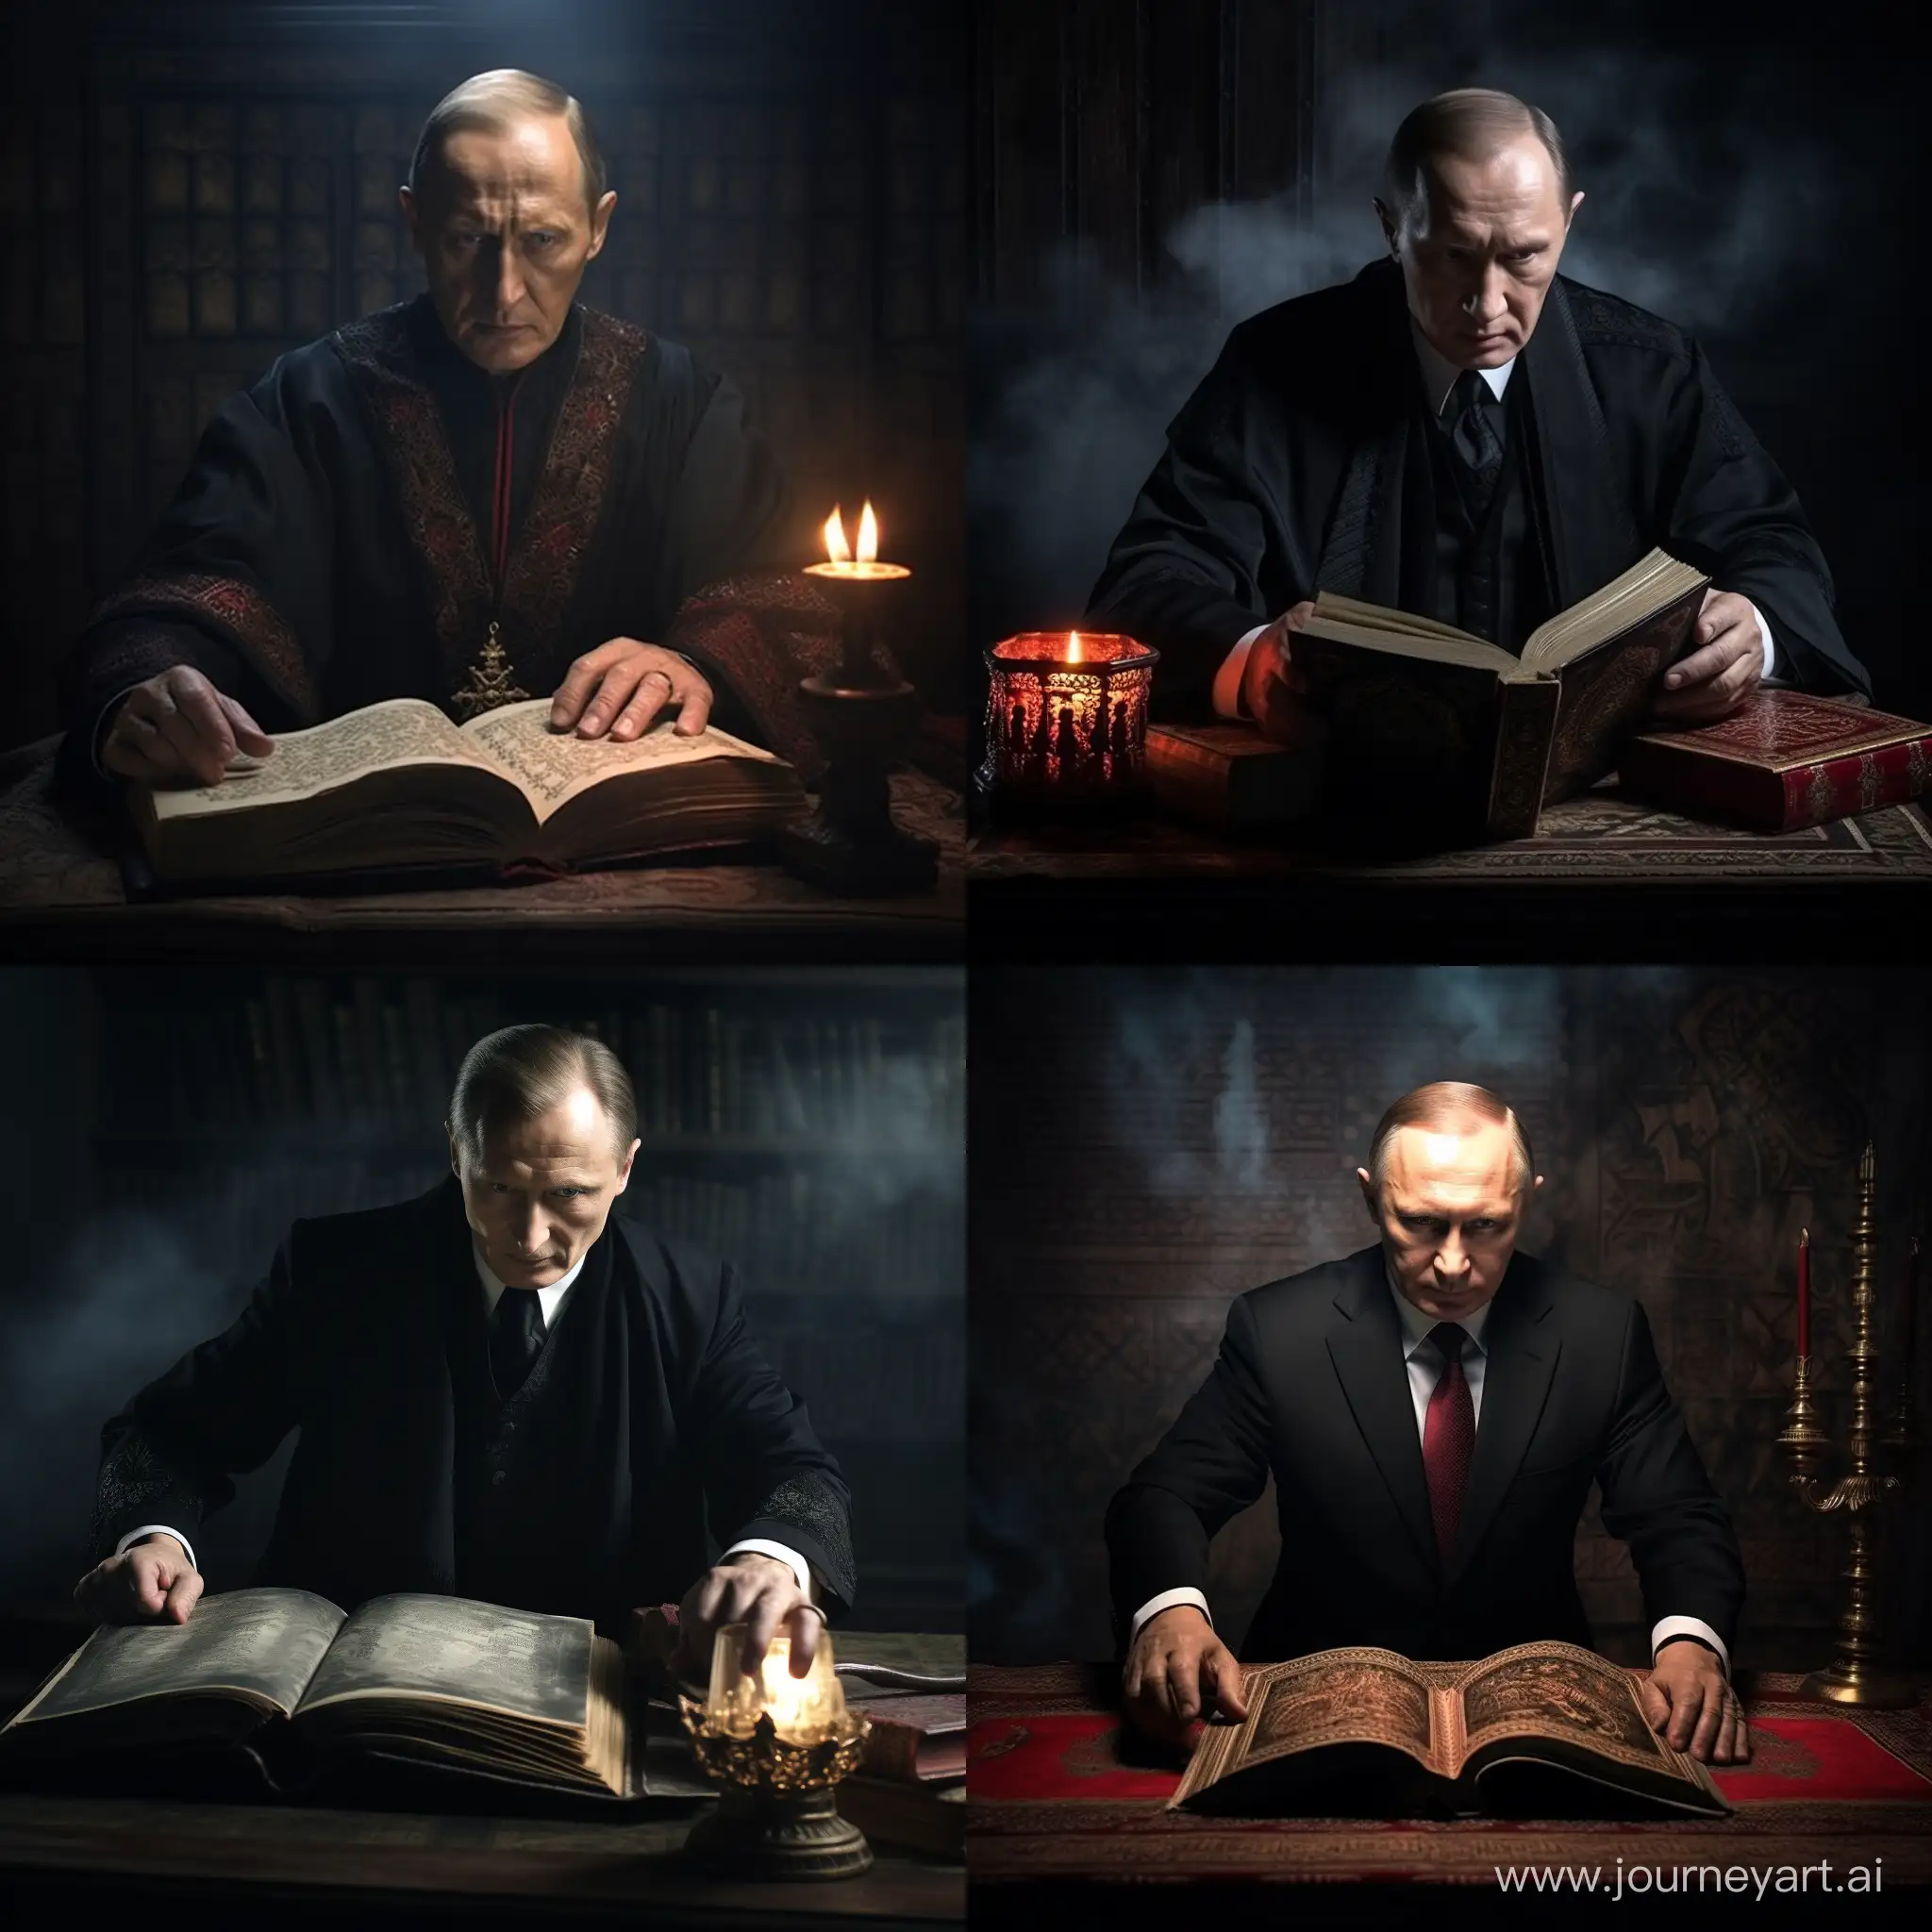 Vladimir-Putin-Unveils-Ancient-Enigmatic-Tome-in-Mysterious-Dark-Office